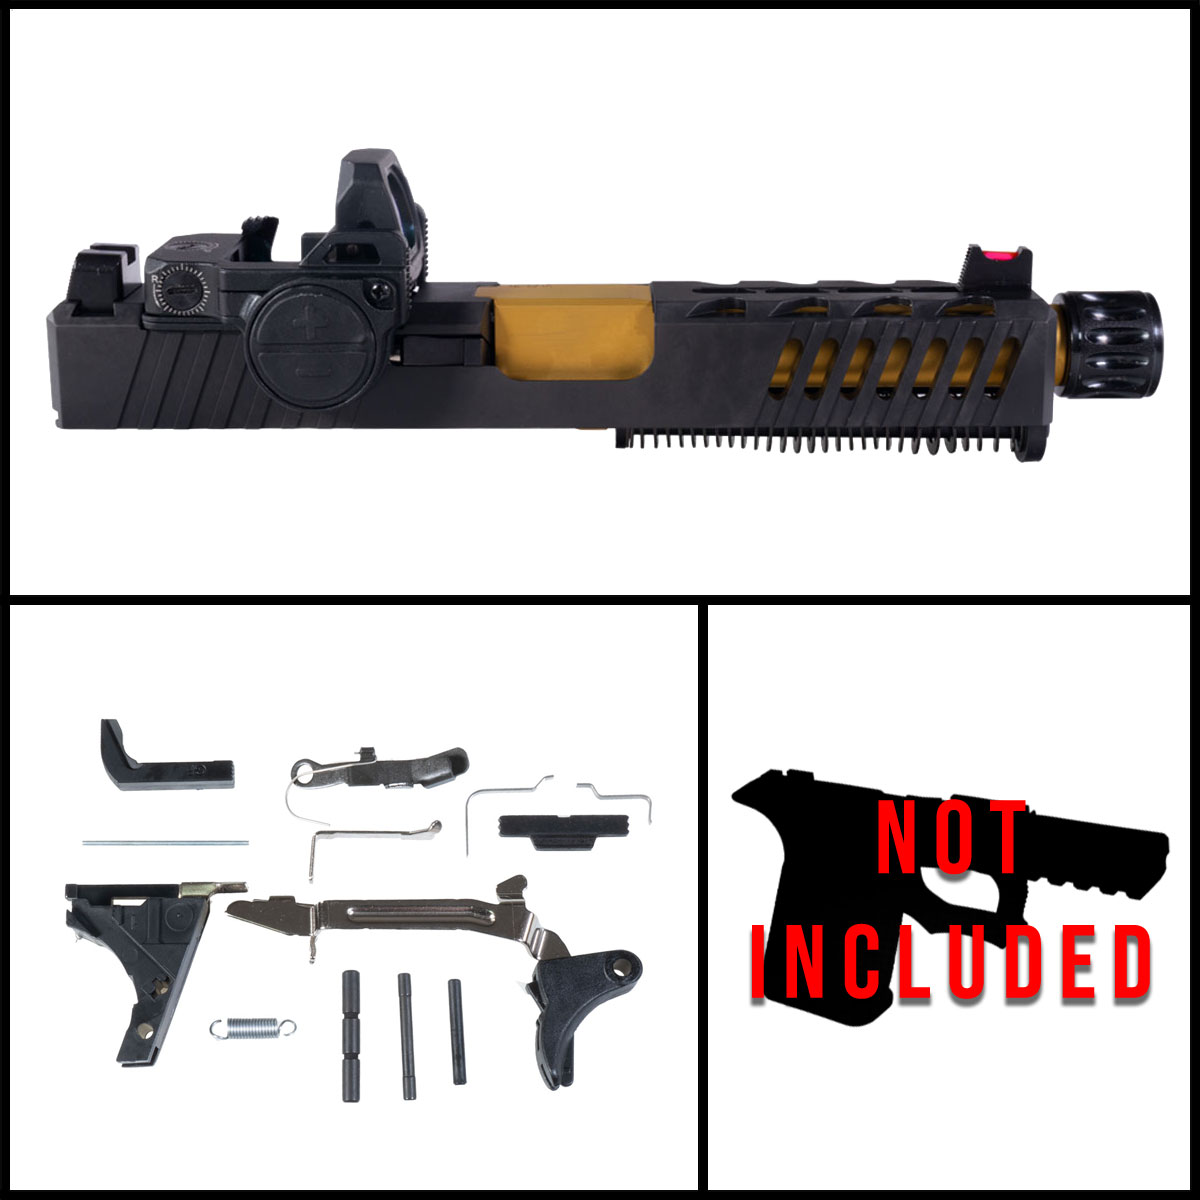 OTD 'Fovea w/ VISM FlipDot Pro' 9mm Full Pistol Build Kit (Everything Minus Frame) - Glock 19 Gen 1-3 Compatible